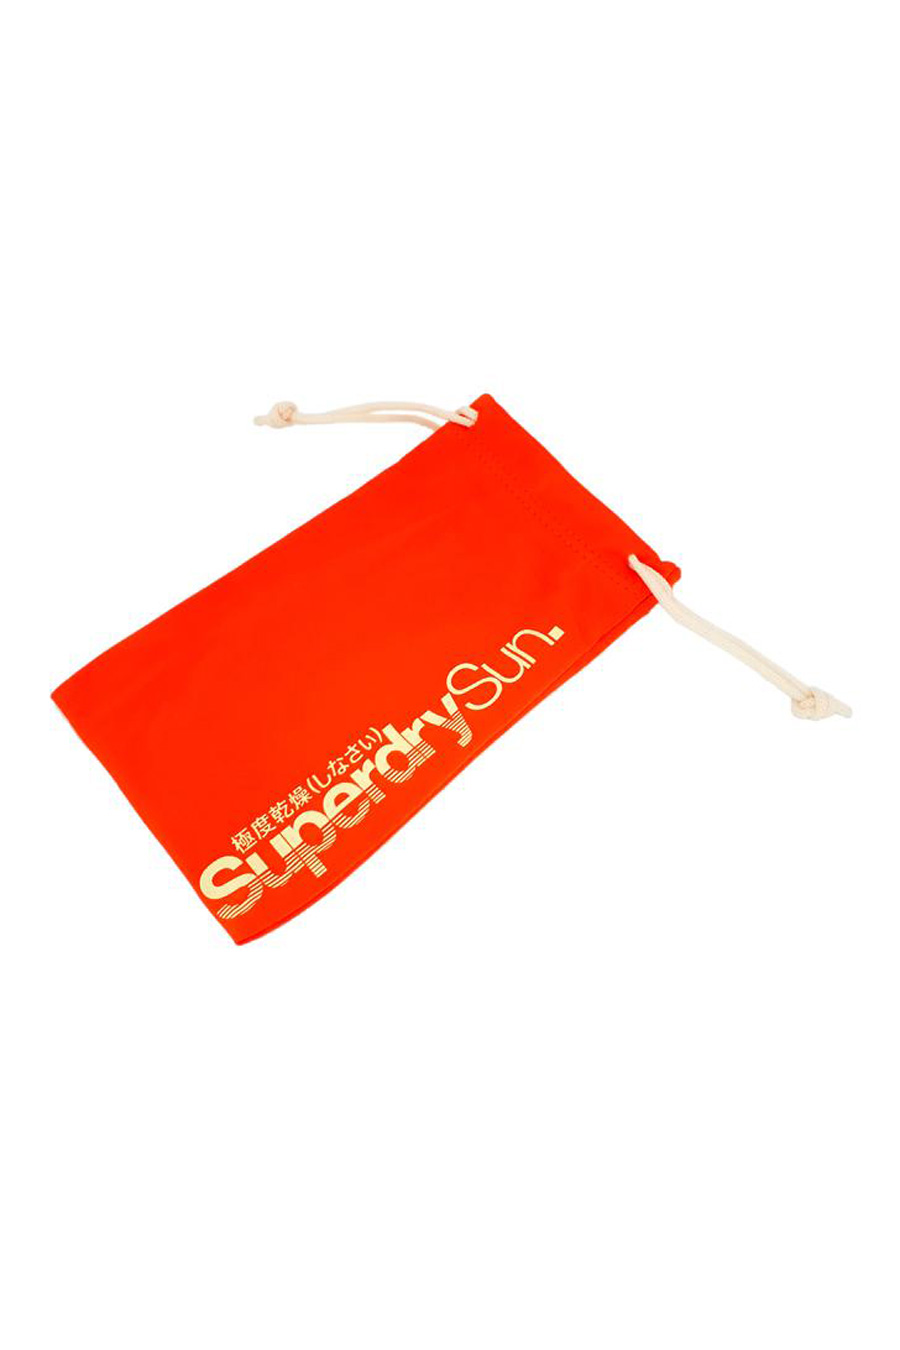 Солнечные очки SUPERDRY SDS-SHOCKWAVE-127